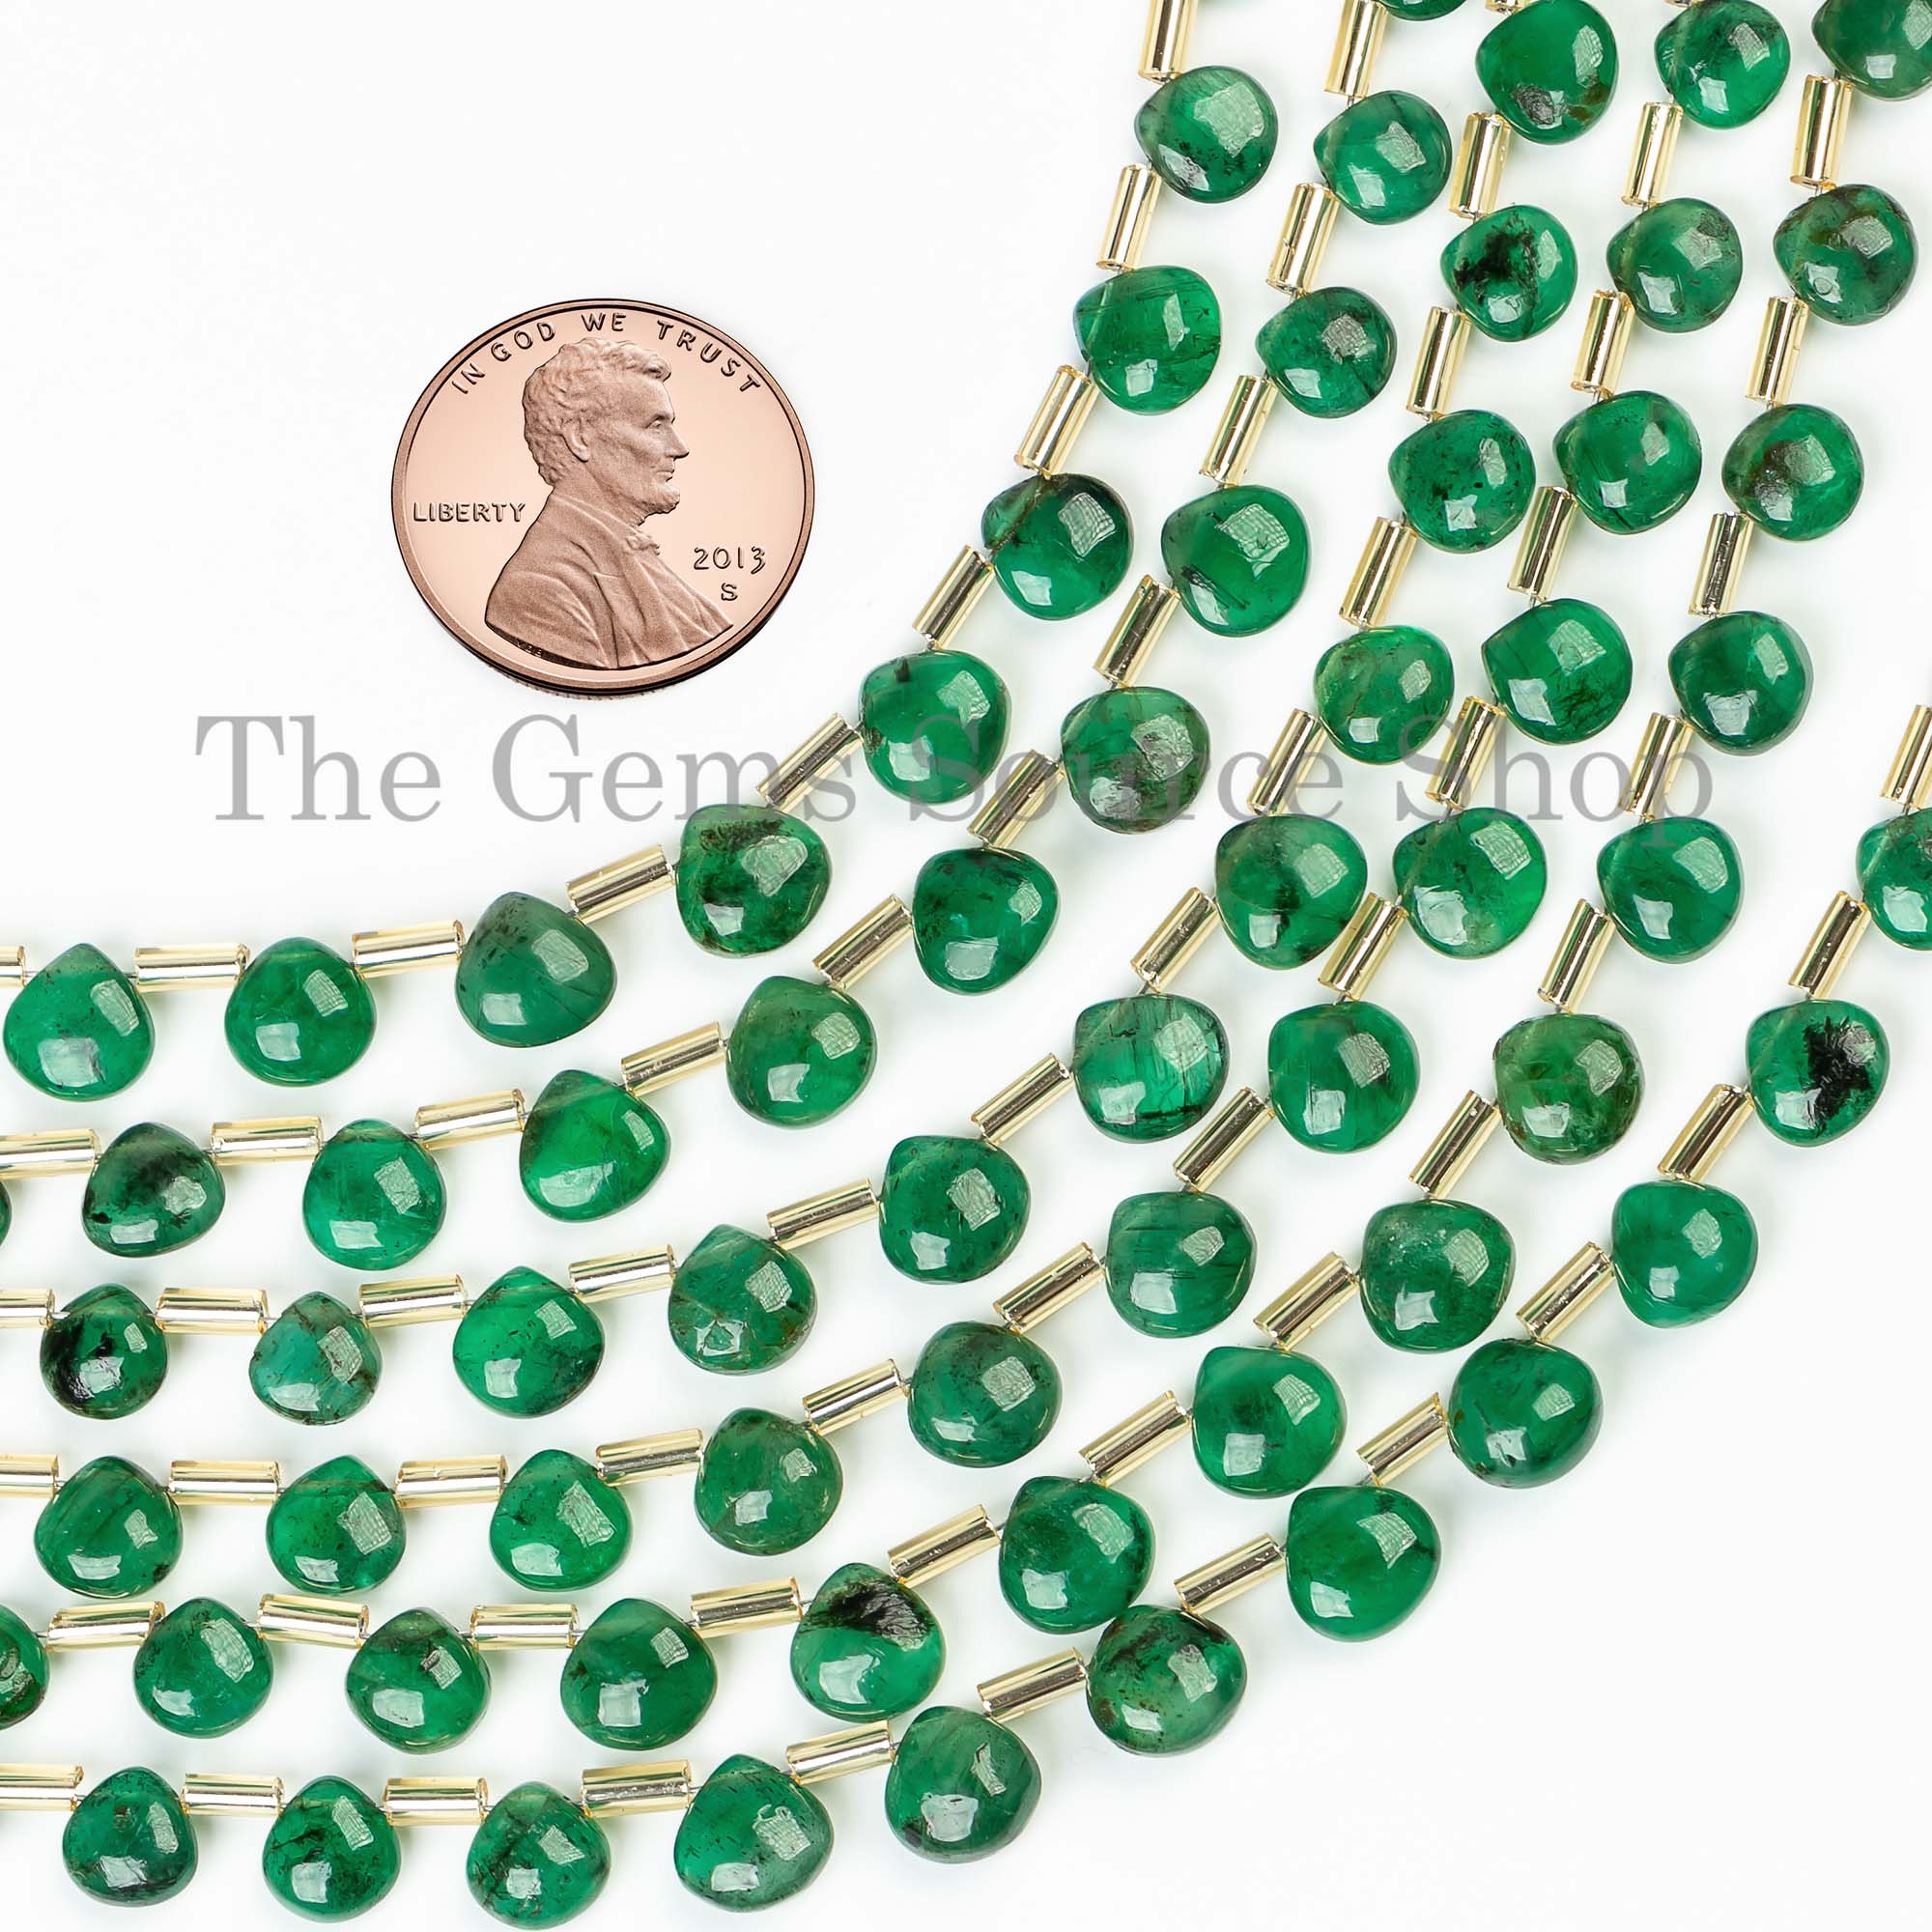 Emerald Smooth Heart Beads, Plain Emerald Beads, Side Drill Heart, Emerald Gemstone Beads